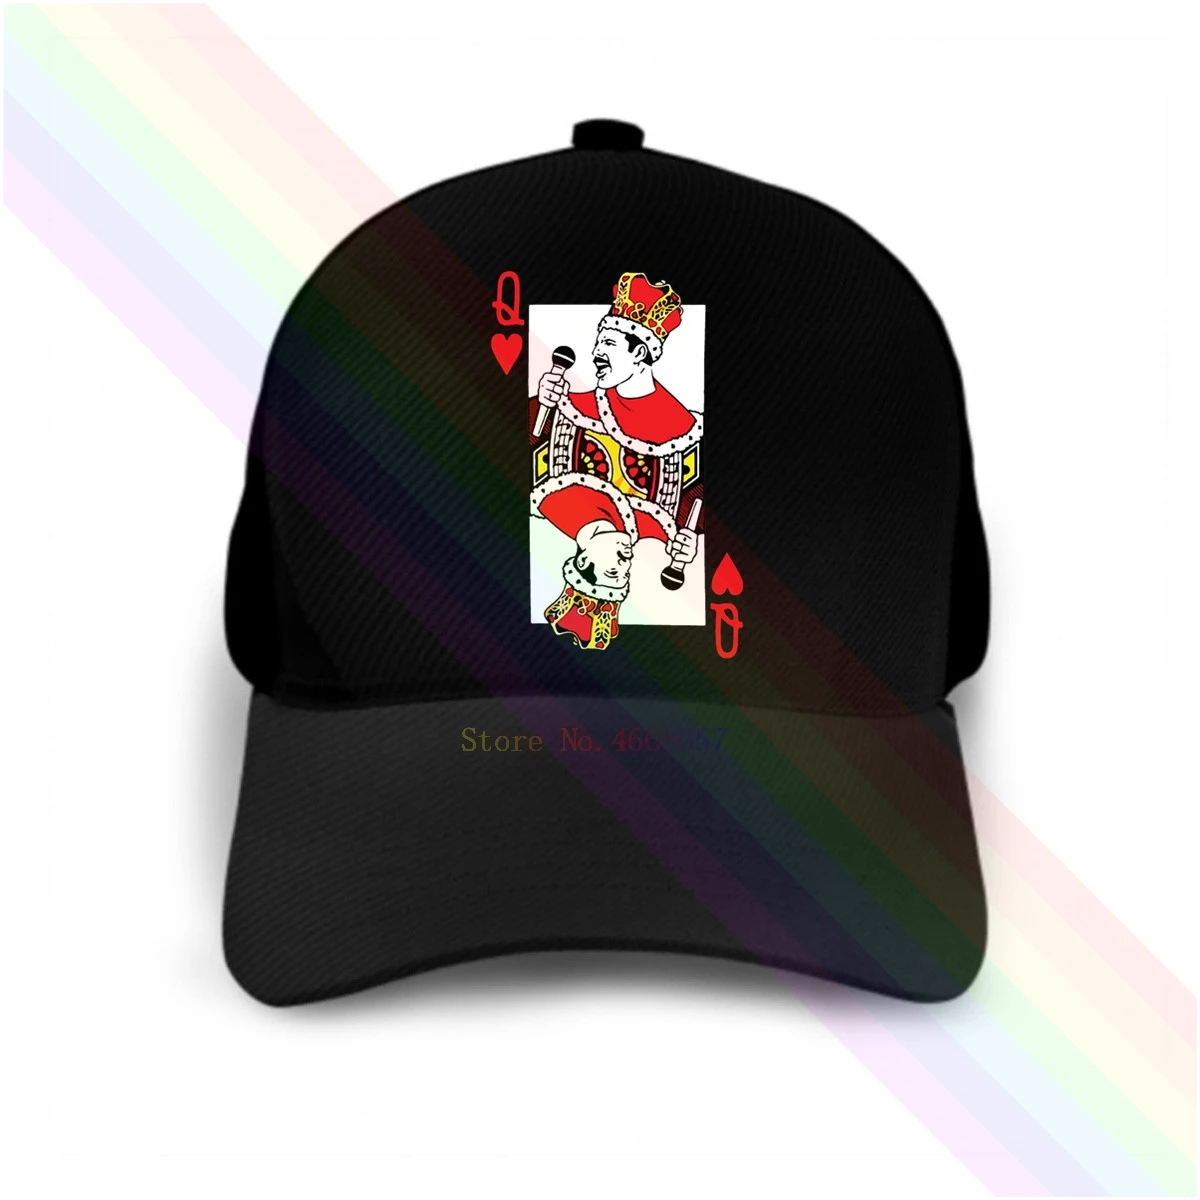 Queen Freddie Mercury Q Joker 2020 новейшая черная популярная бейсболка головные уборы унисекс |